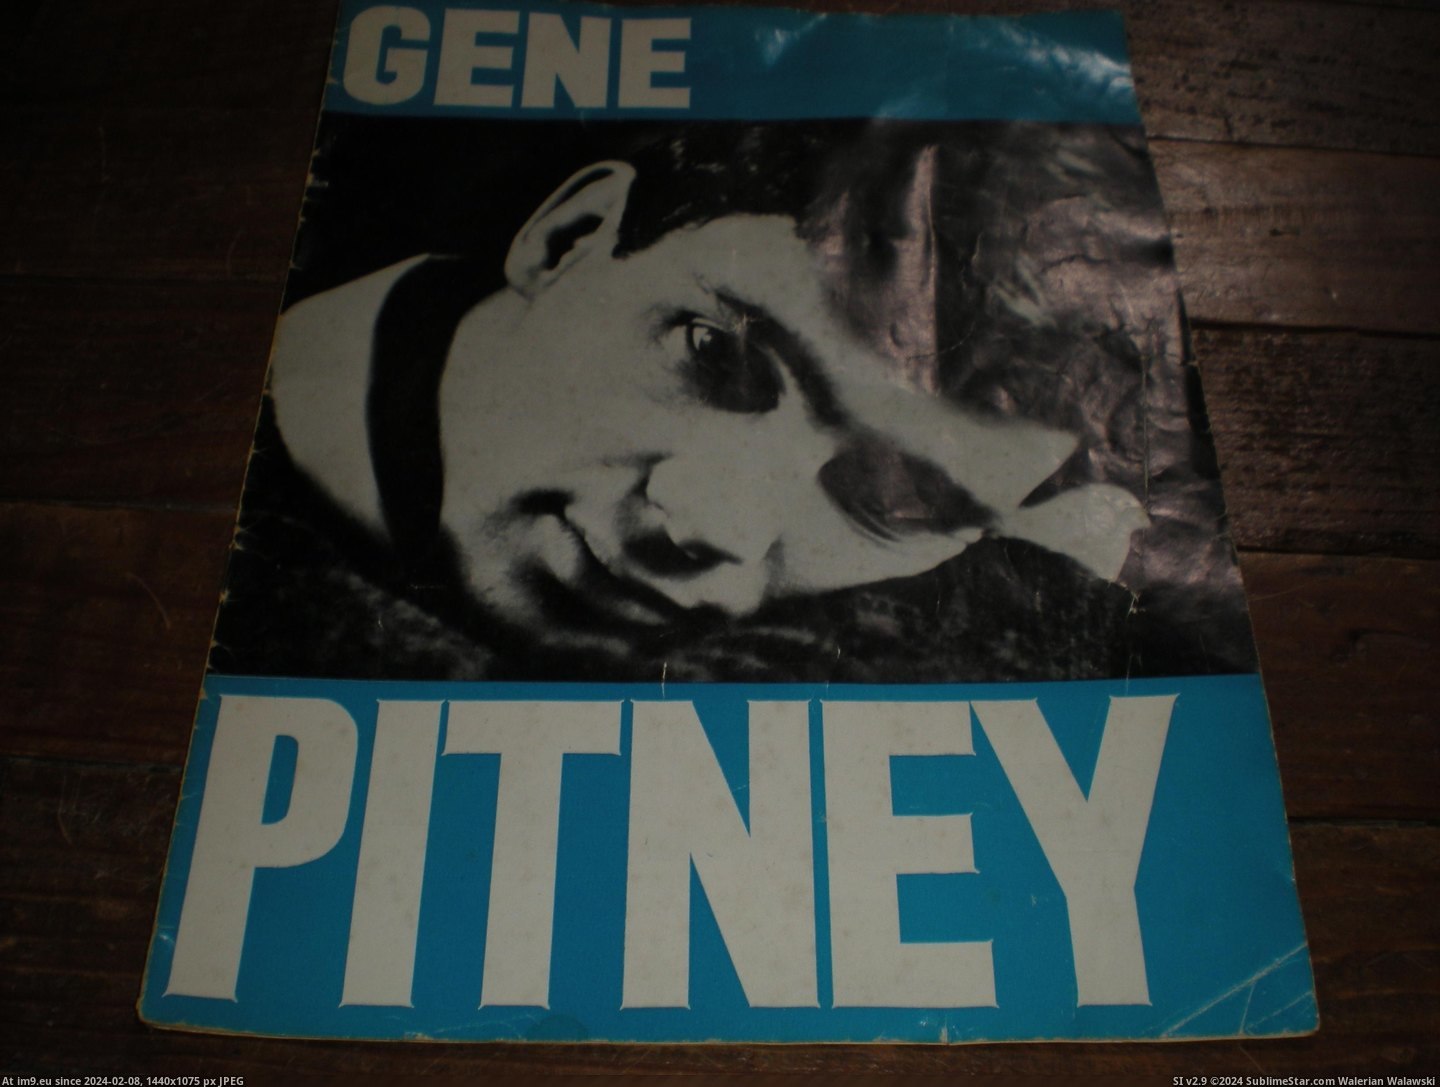 #Gene #Pitney #Prog Gene Pitney prog 1 Pic. (Изображение из альбом new 1))